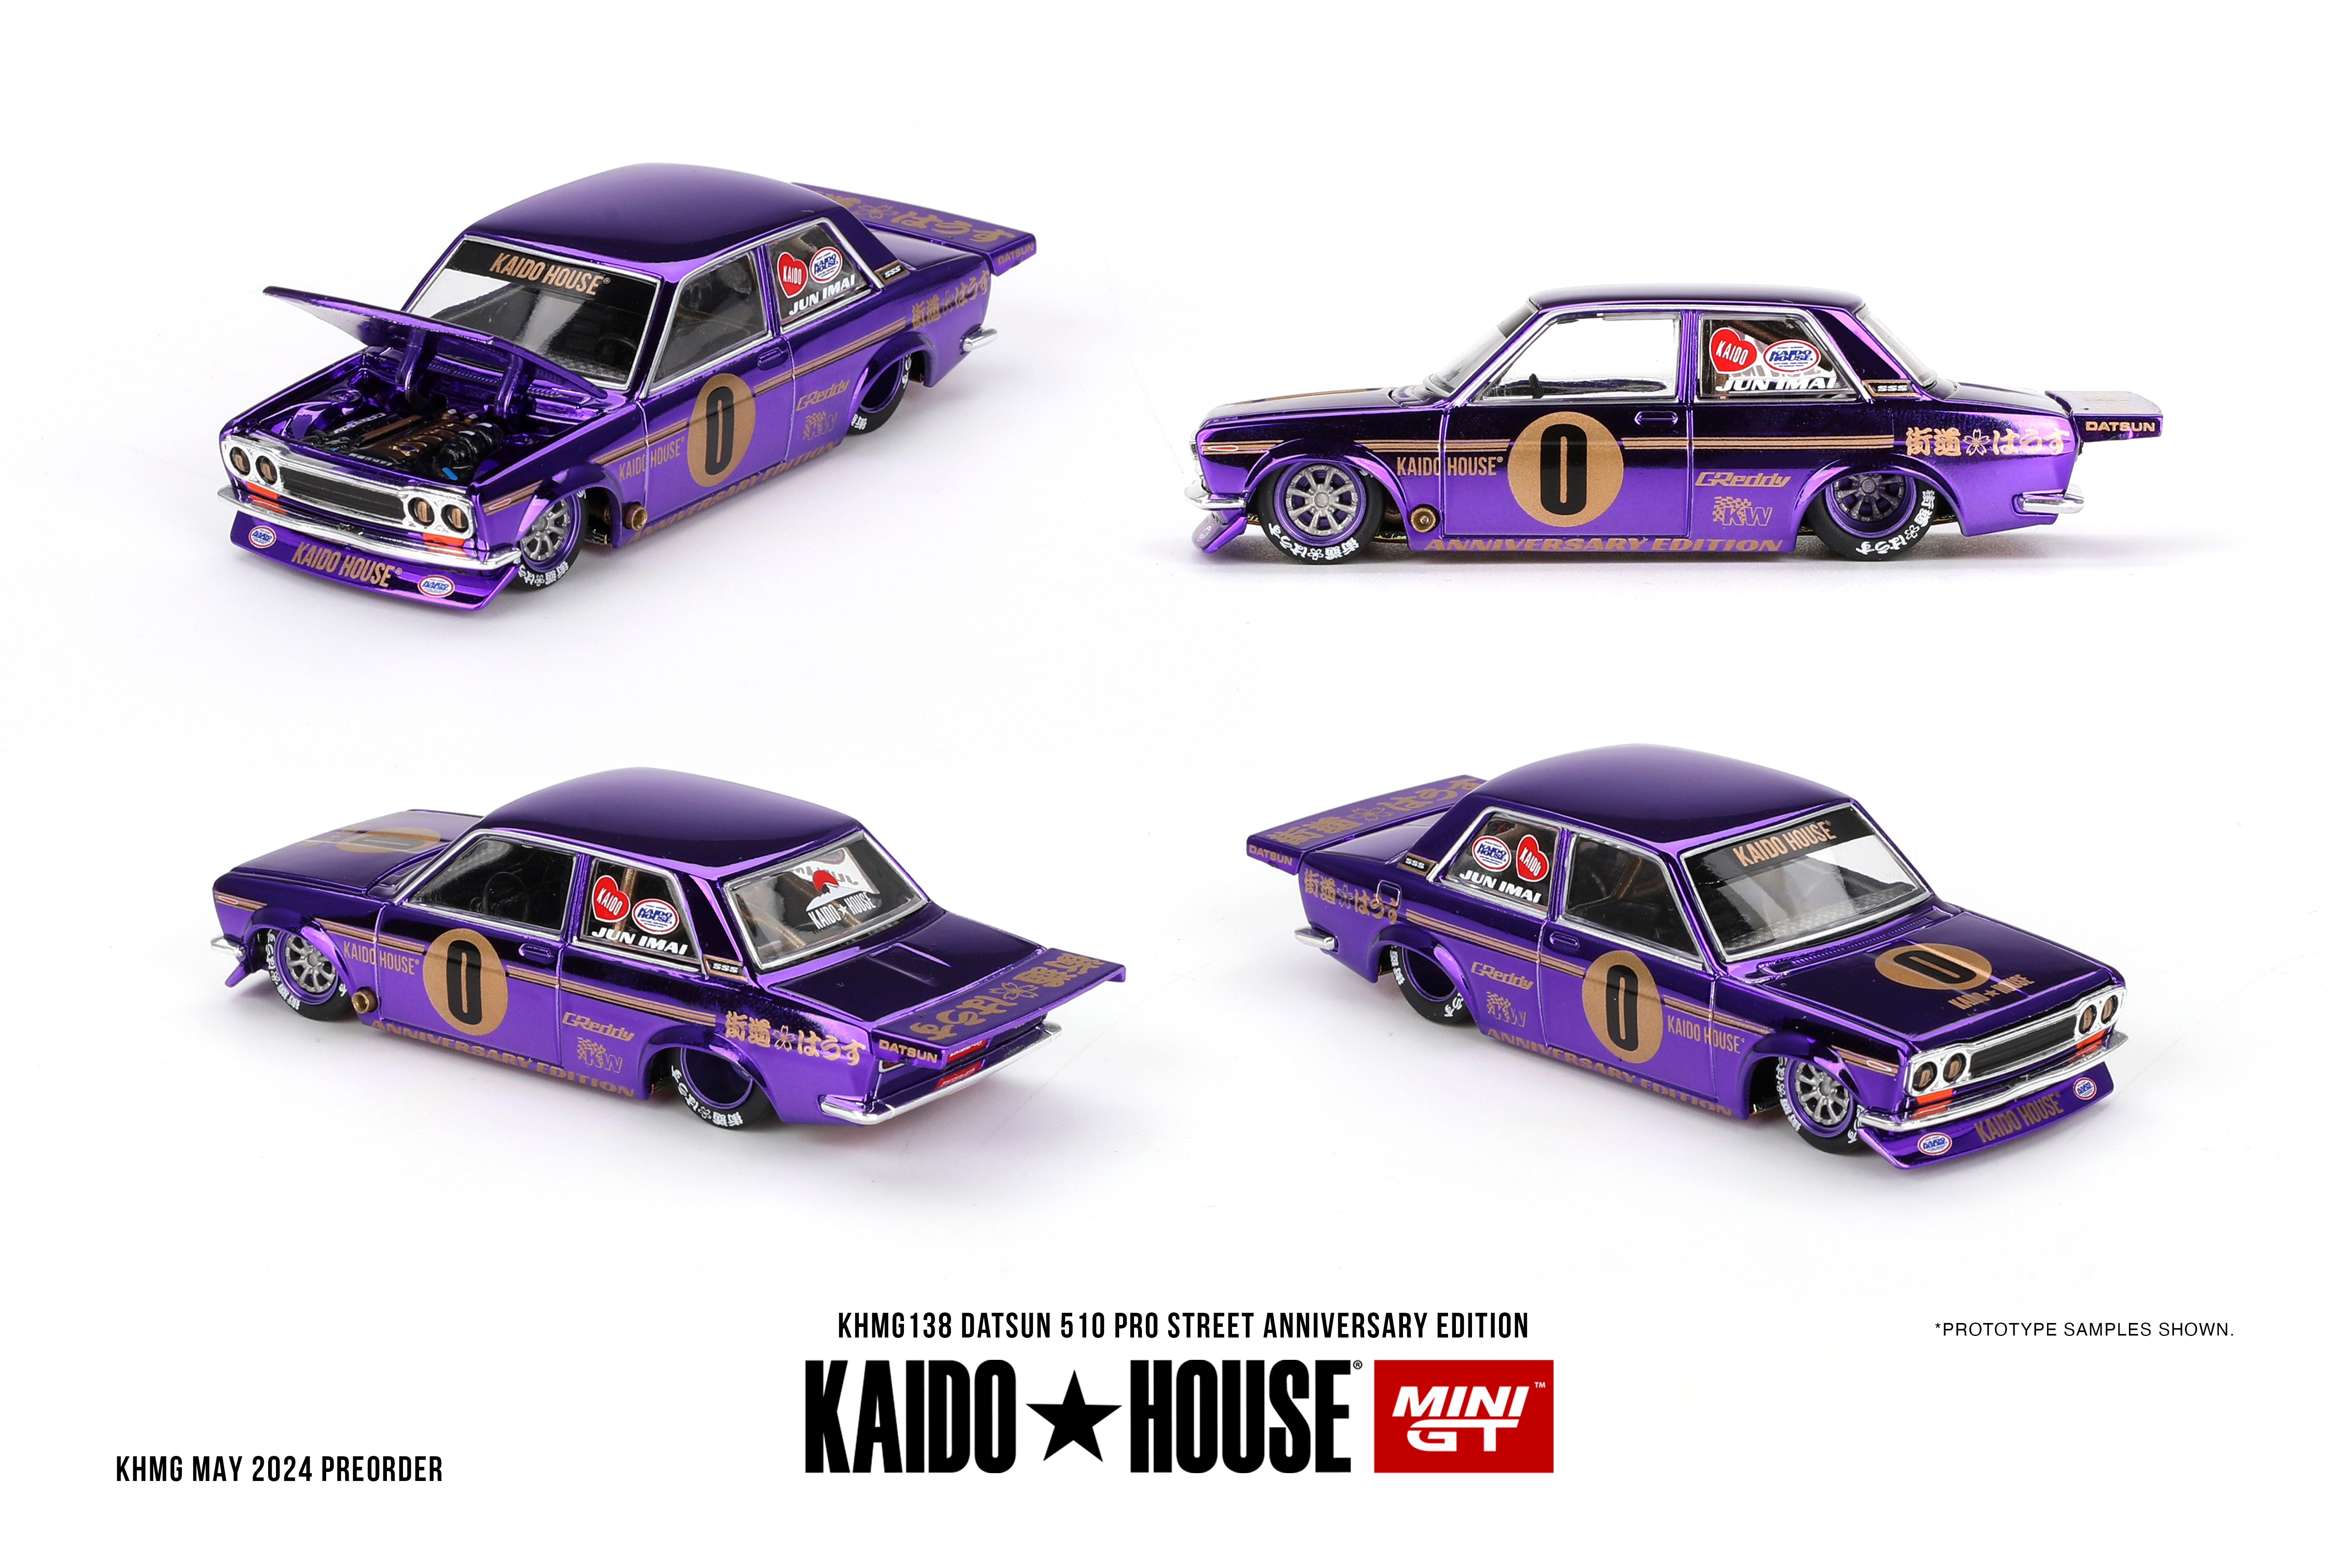 Mini GT X Kaido House Datsun 510 Pro Street Anniversary Edition 